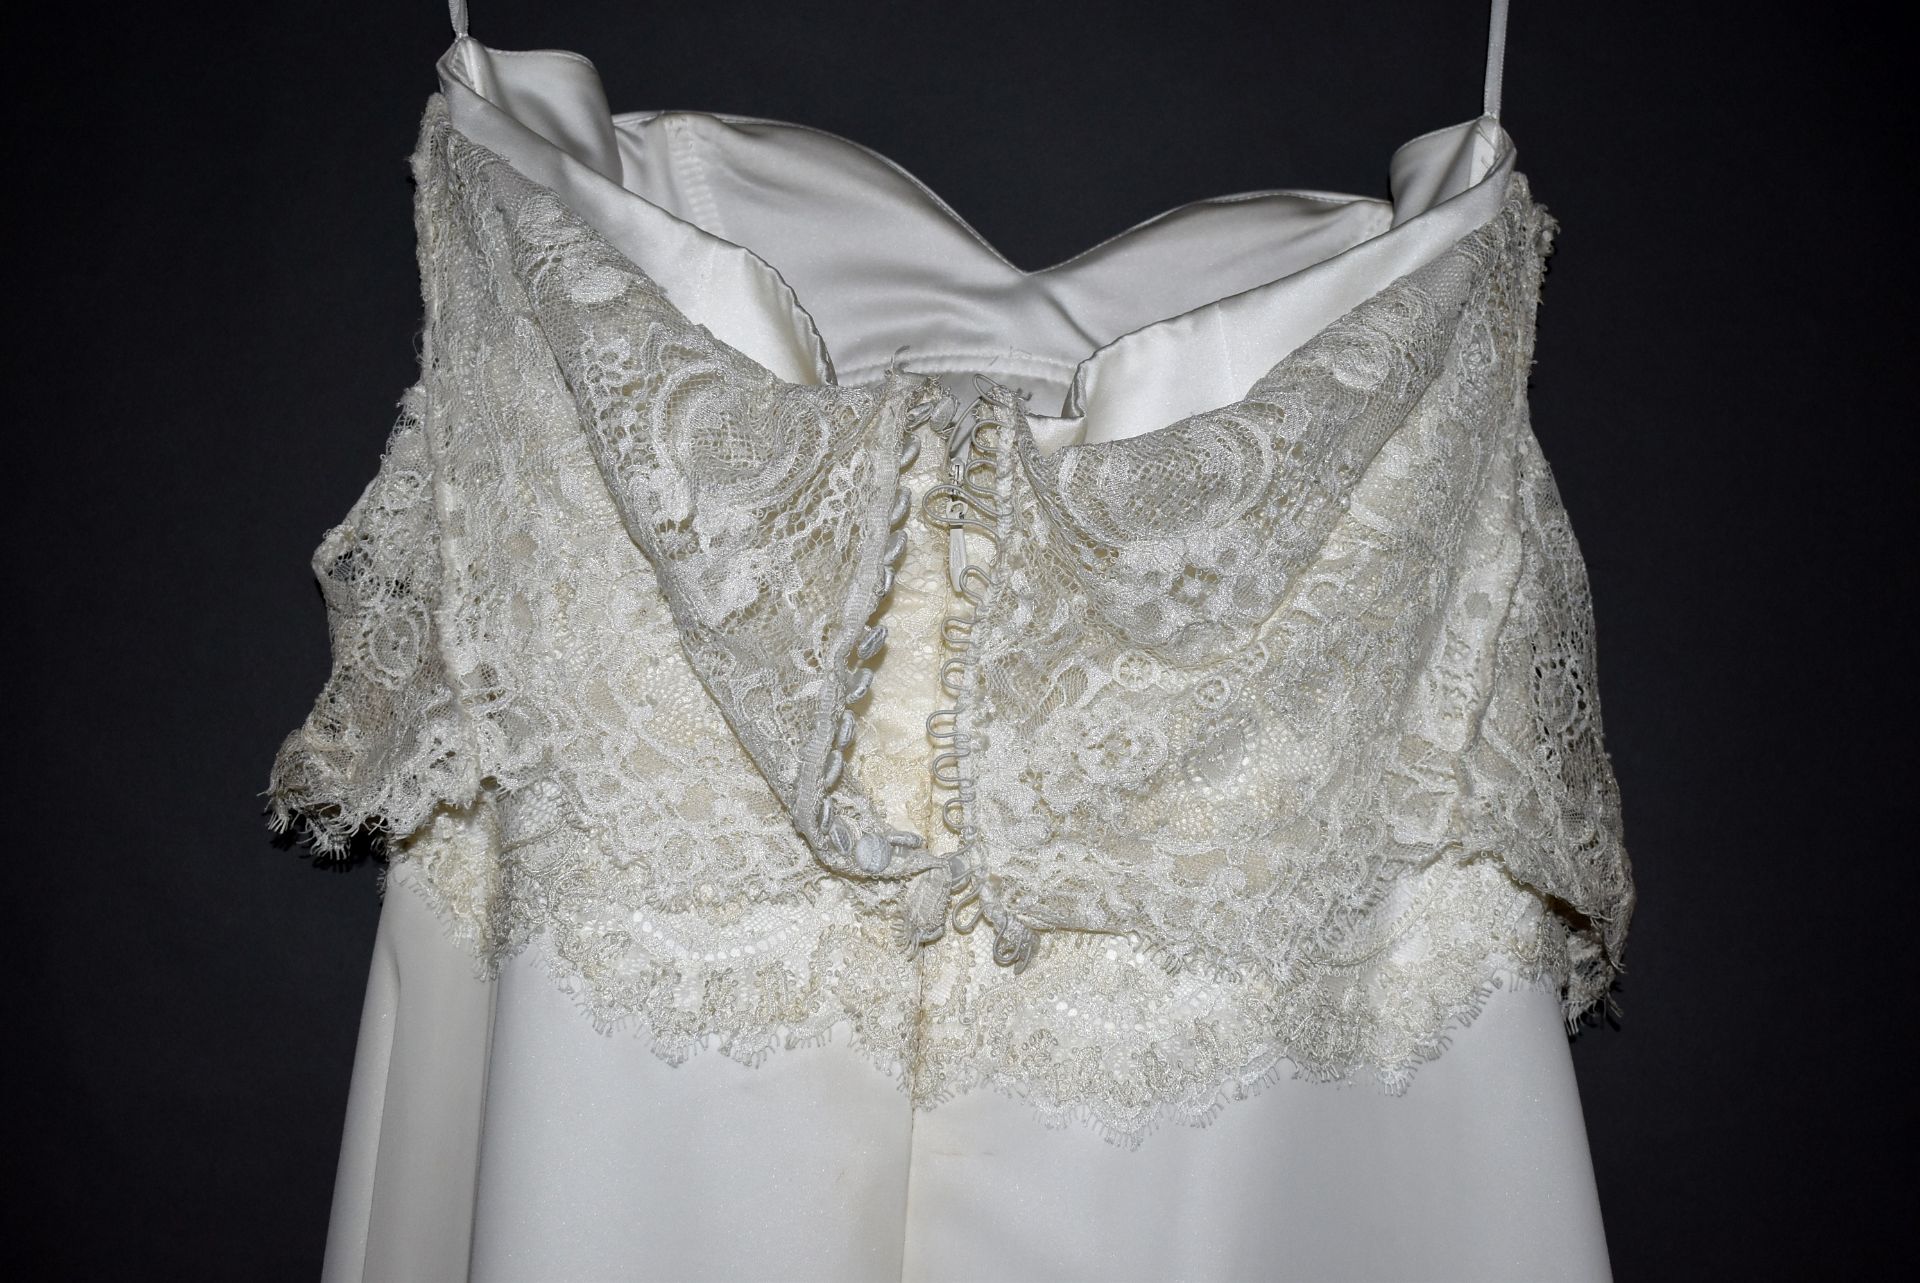 1 x LUSAN MANDONGUS Off The Shoulder Lace Bodice Designer Wedding Dress Bridal Gown RRP £1,450 UK 14 - Image 2 of 6